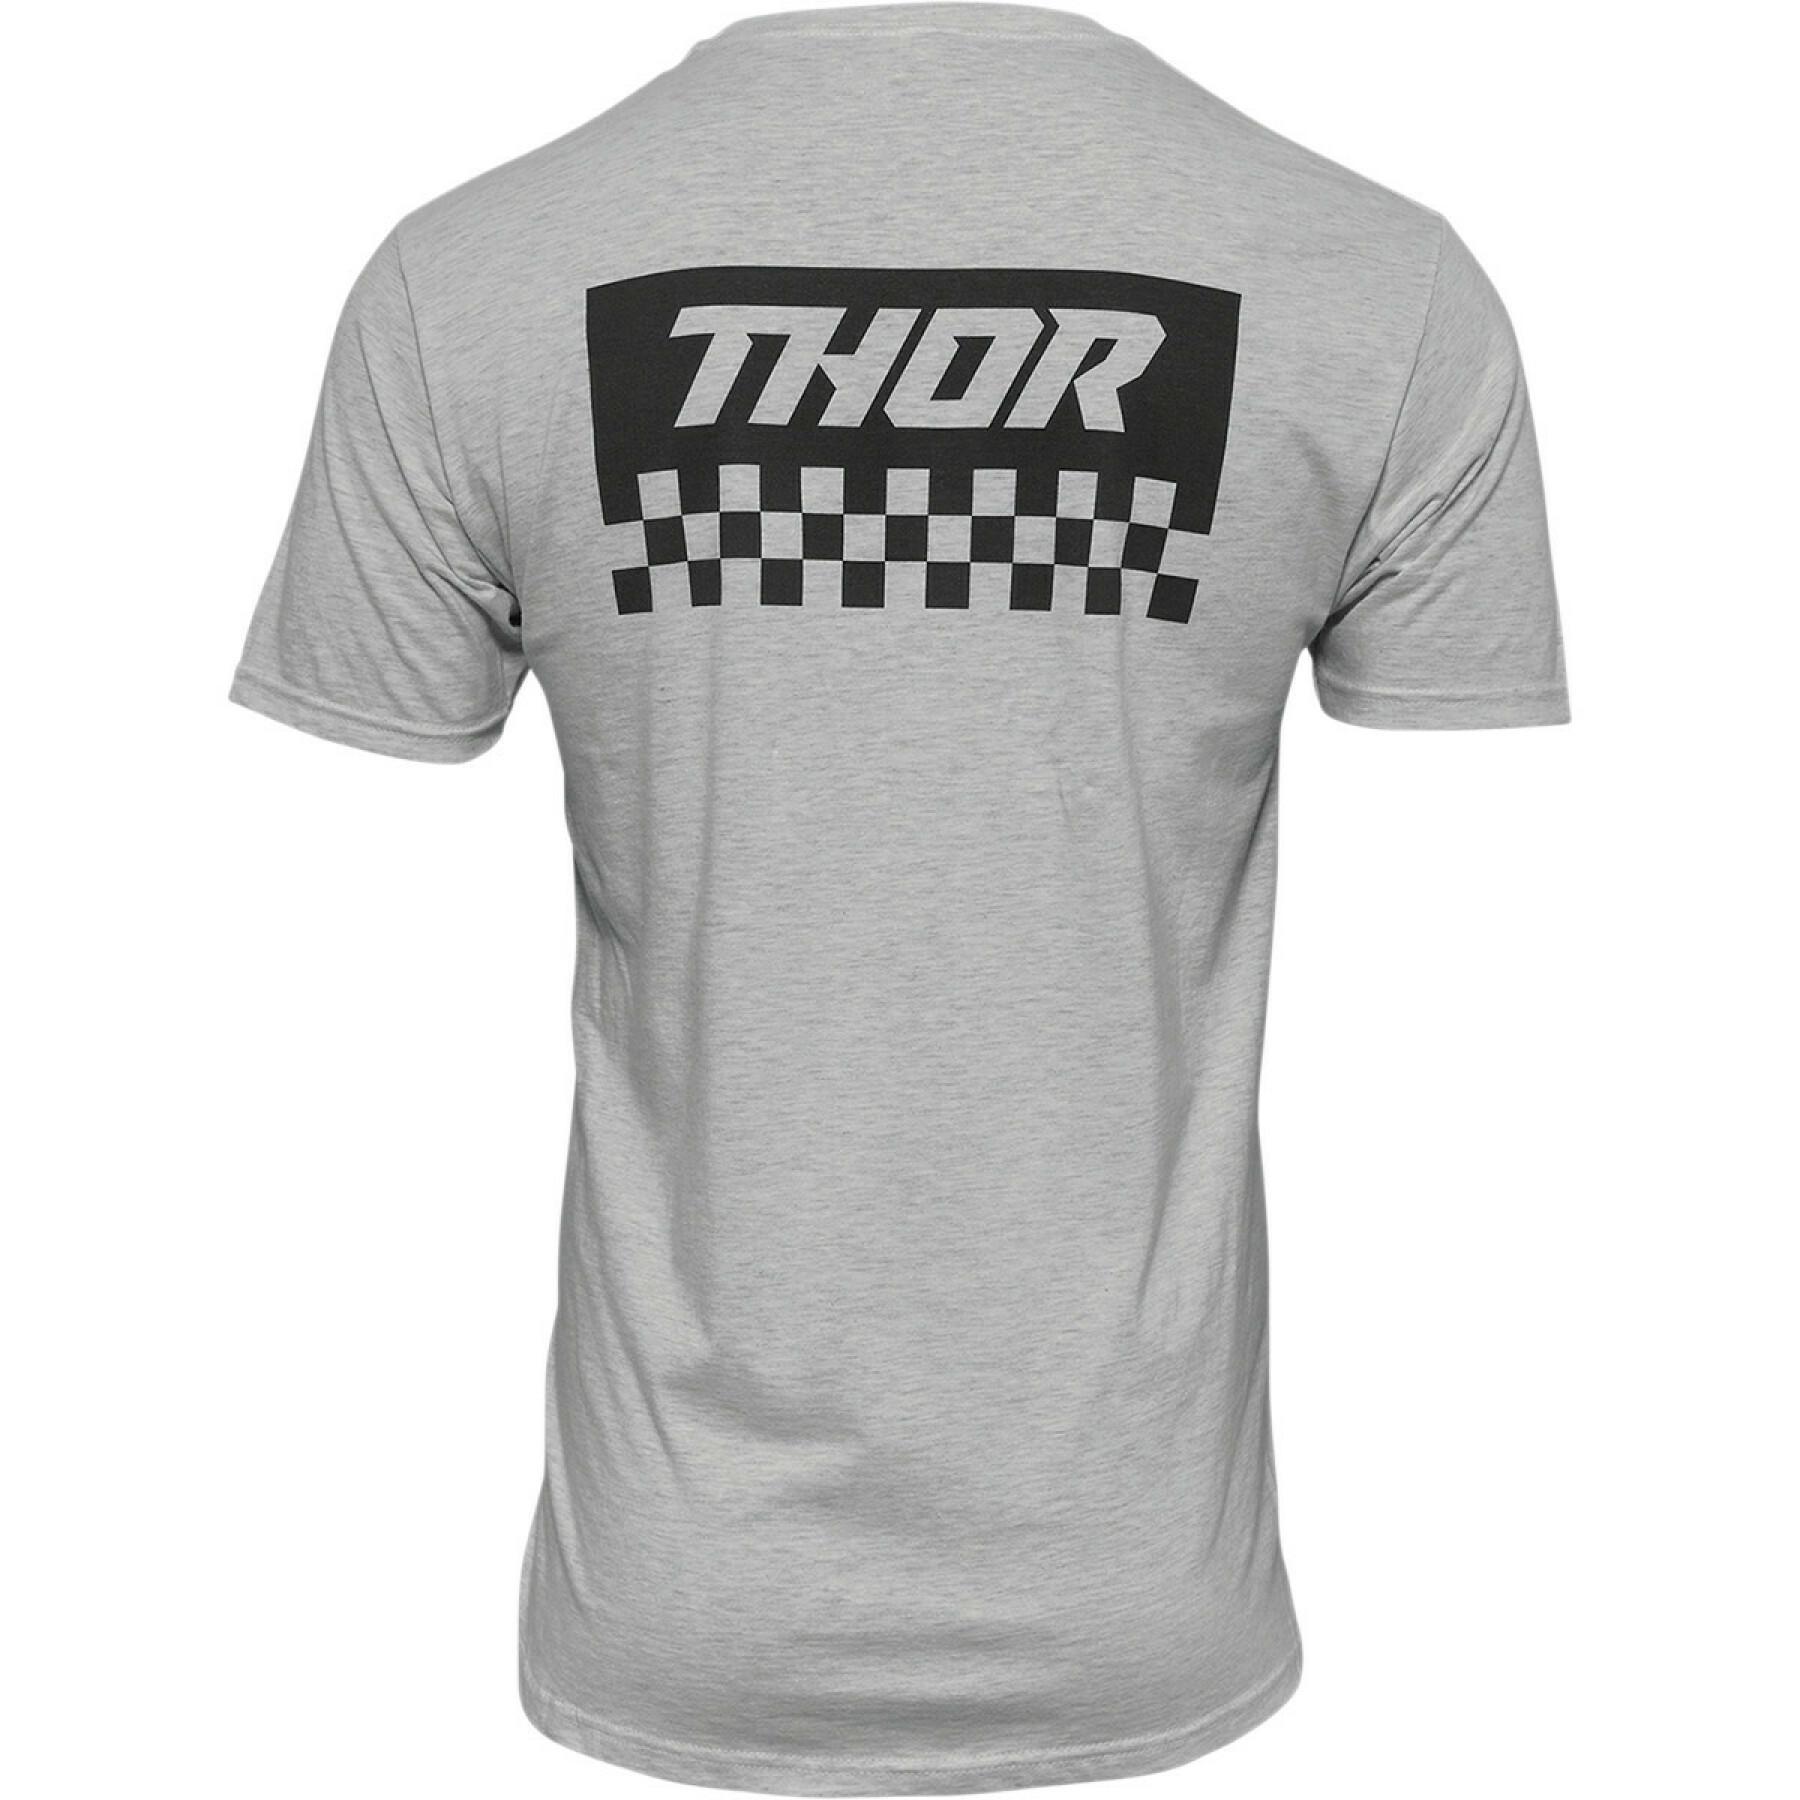 T-shirt Thor checkers oatmeal